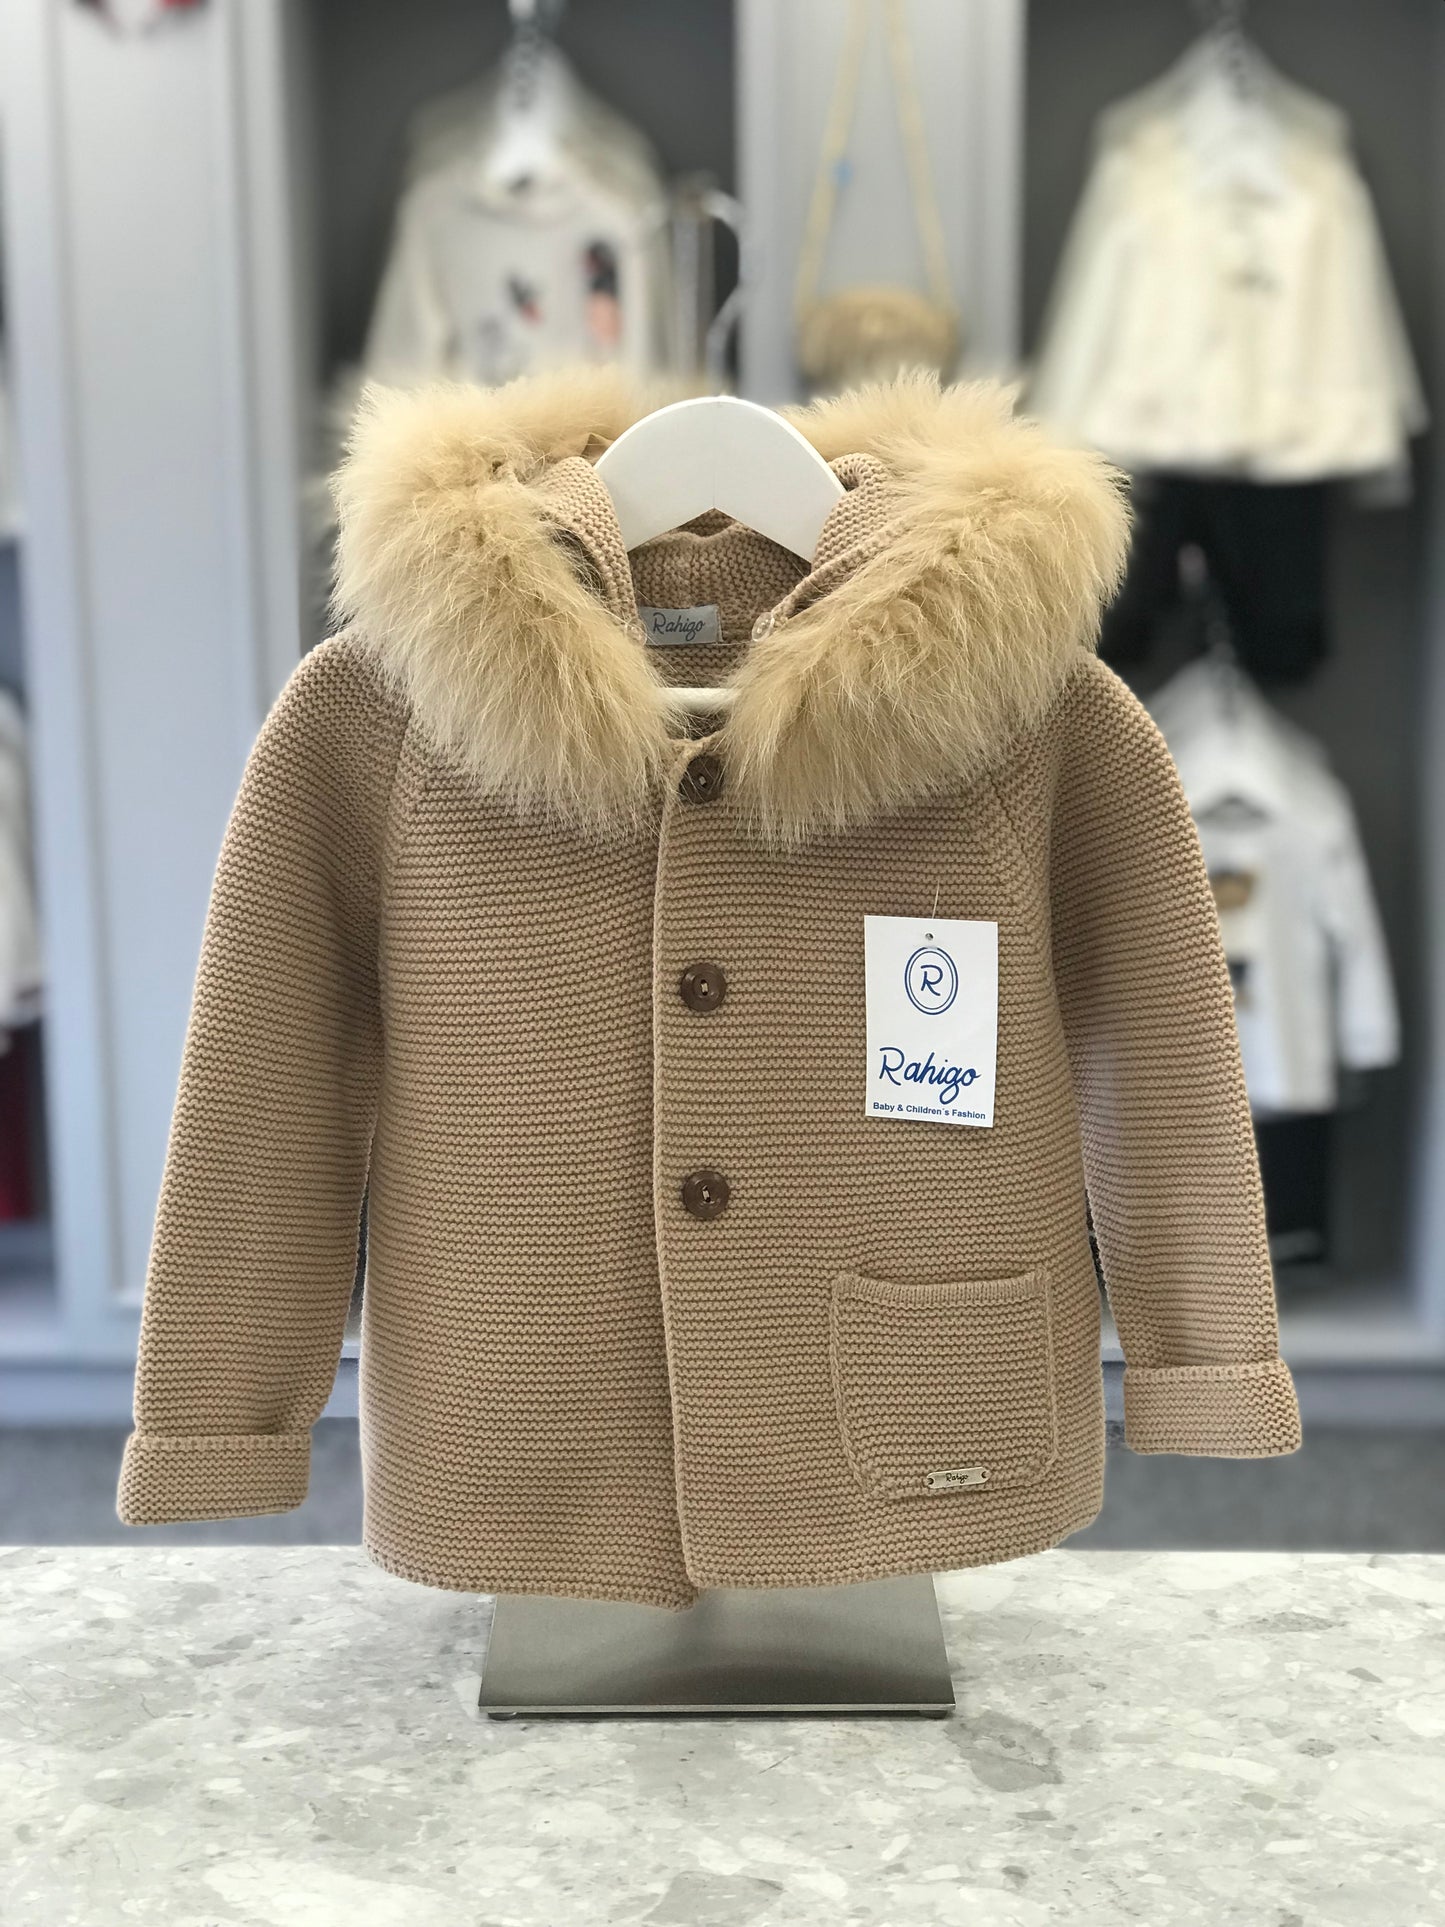 RAHIGO Camel Fur Knitted Coat